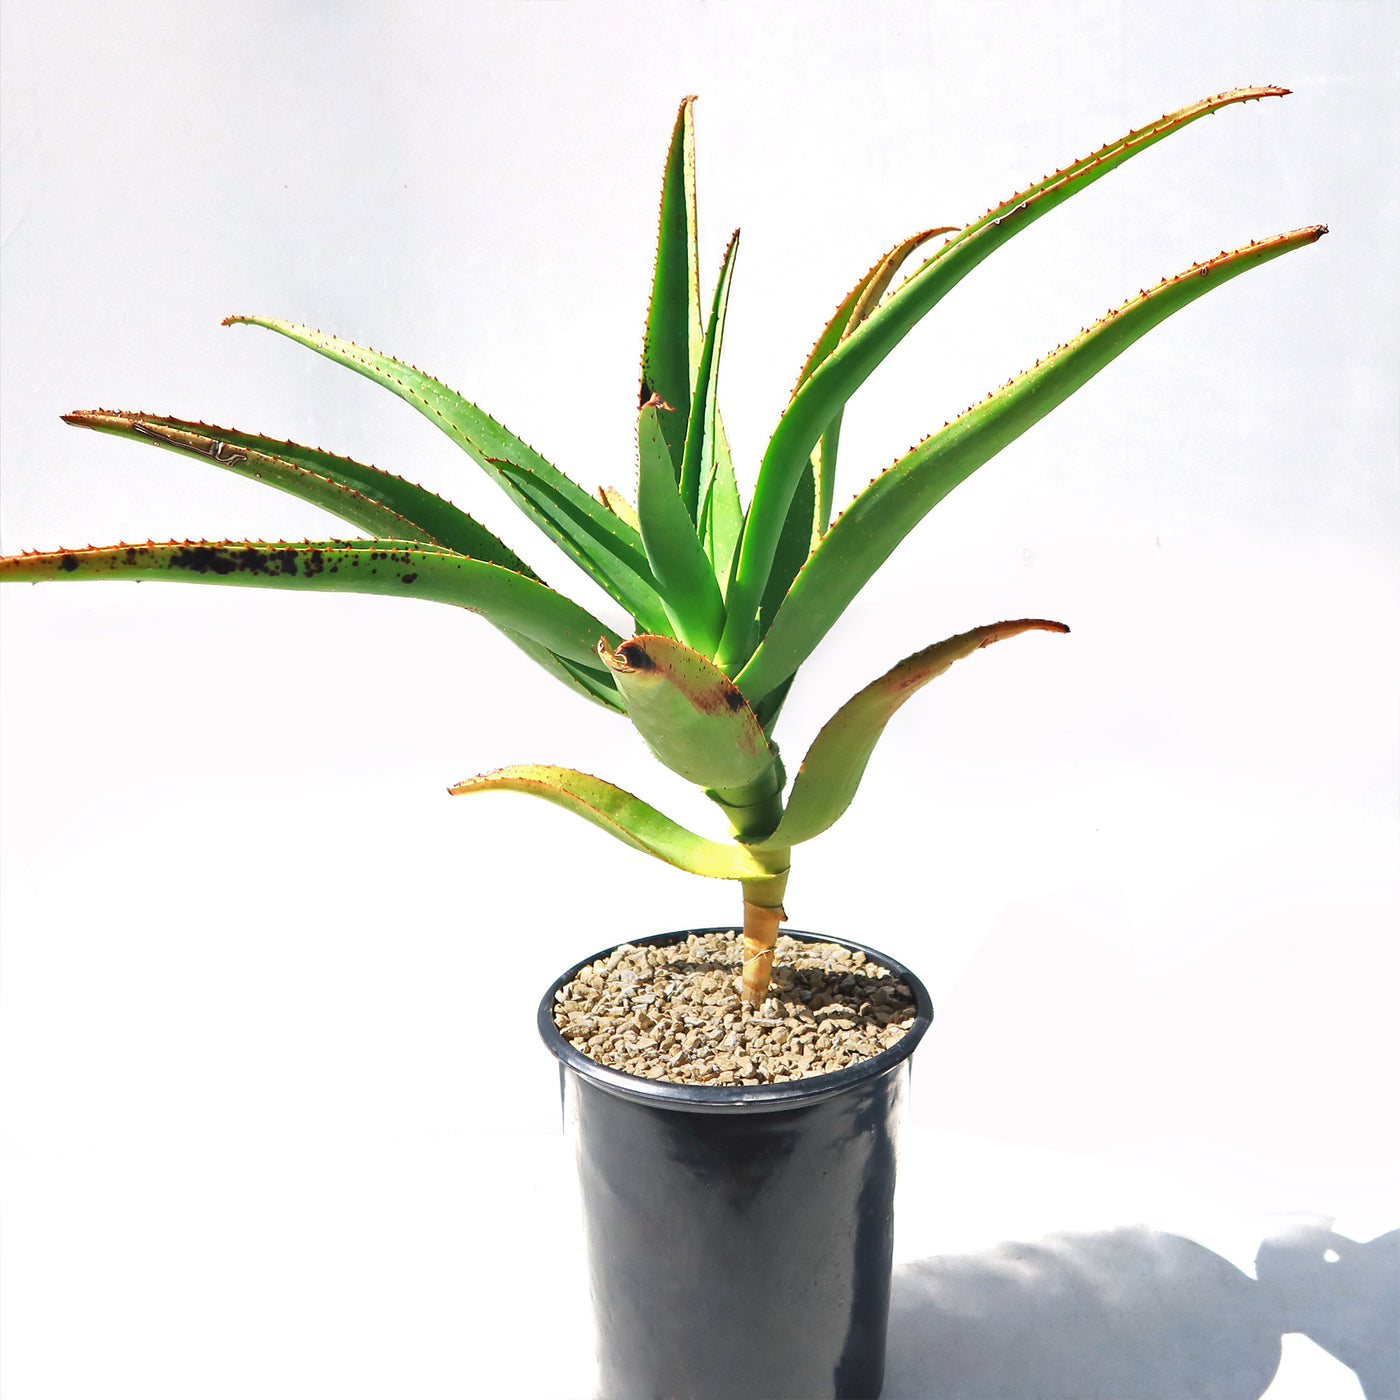 Aloe Tree - Aloidendron barberae bainesii